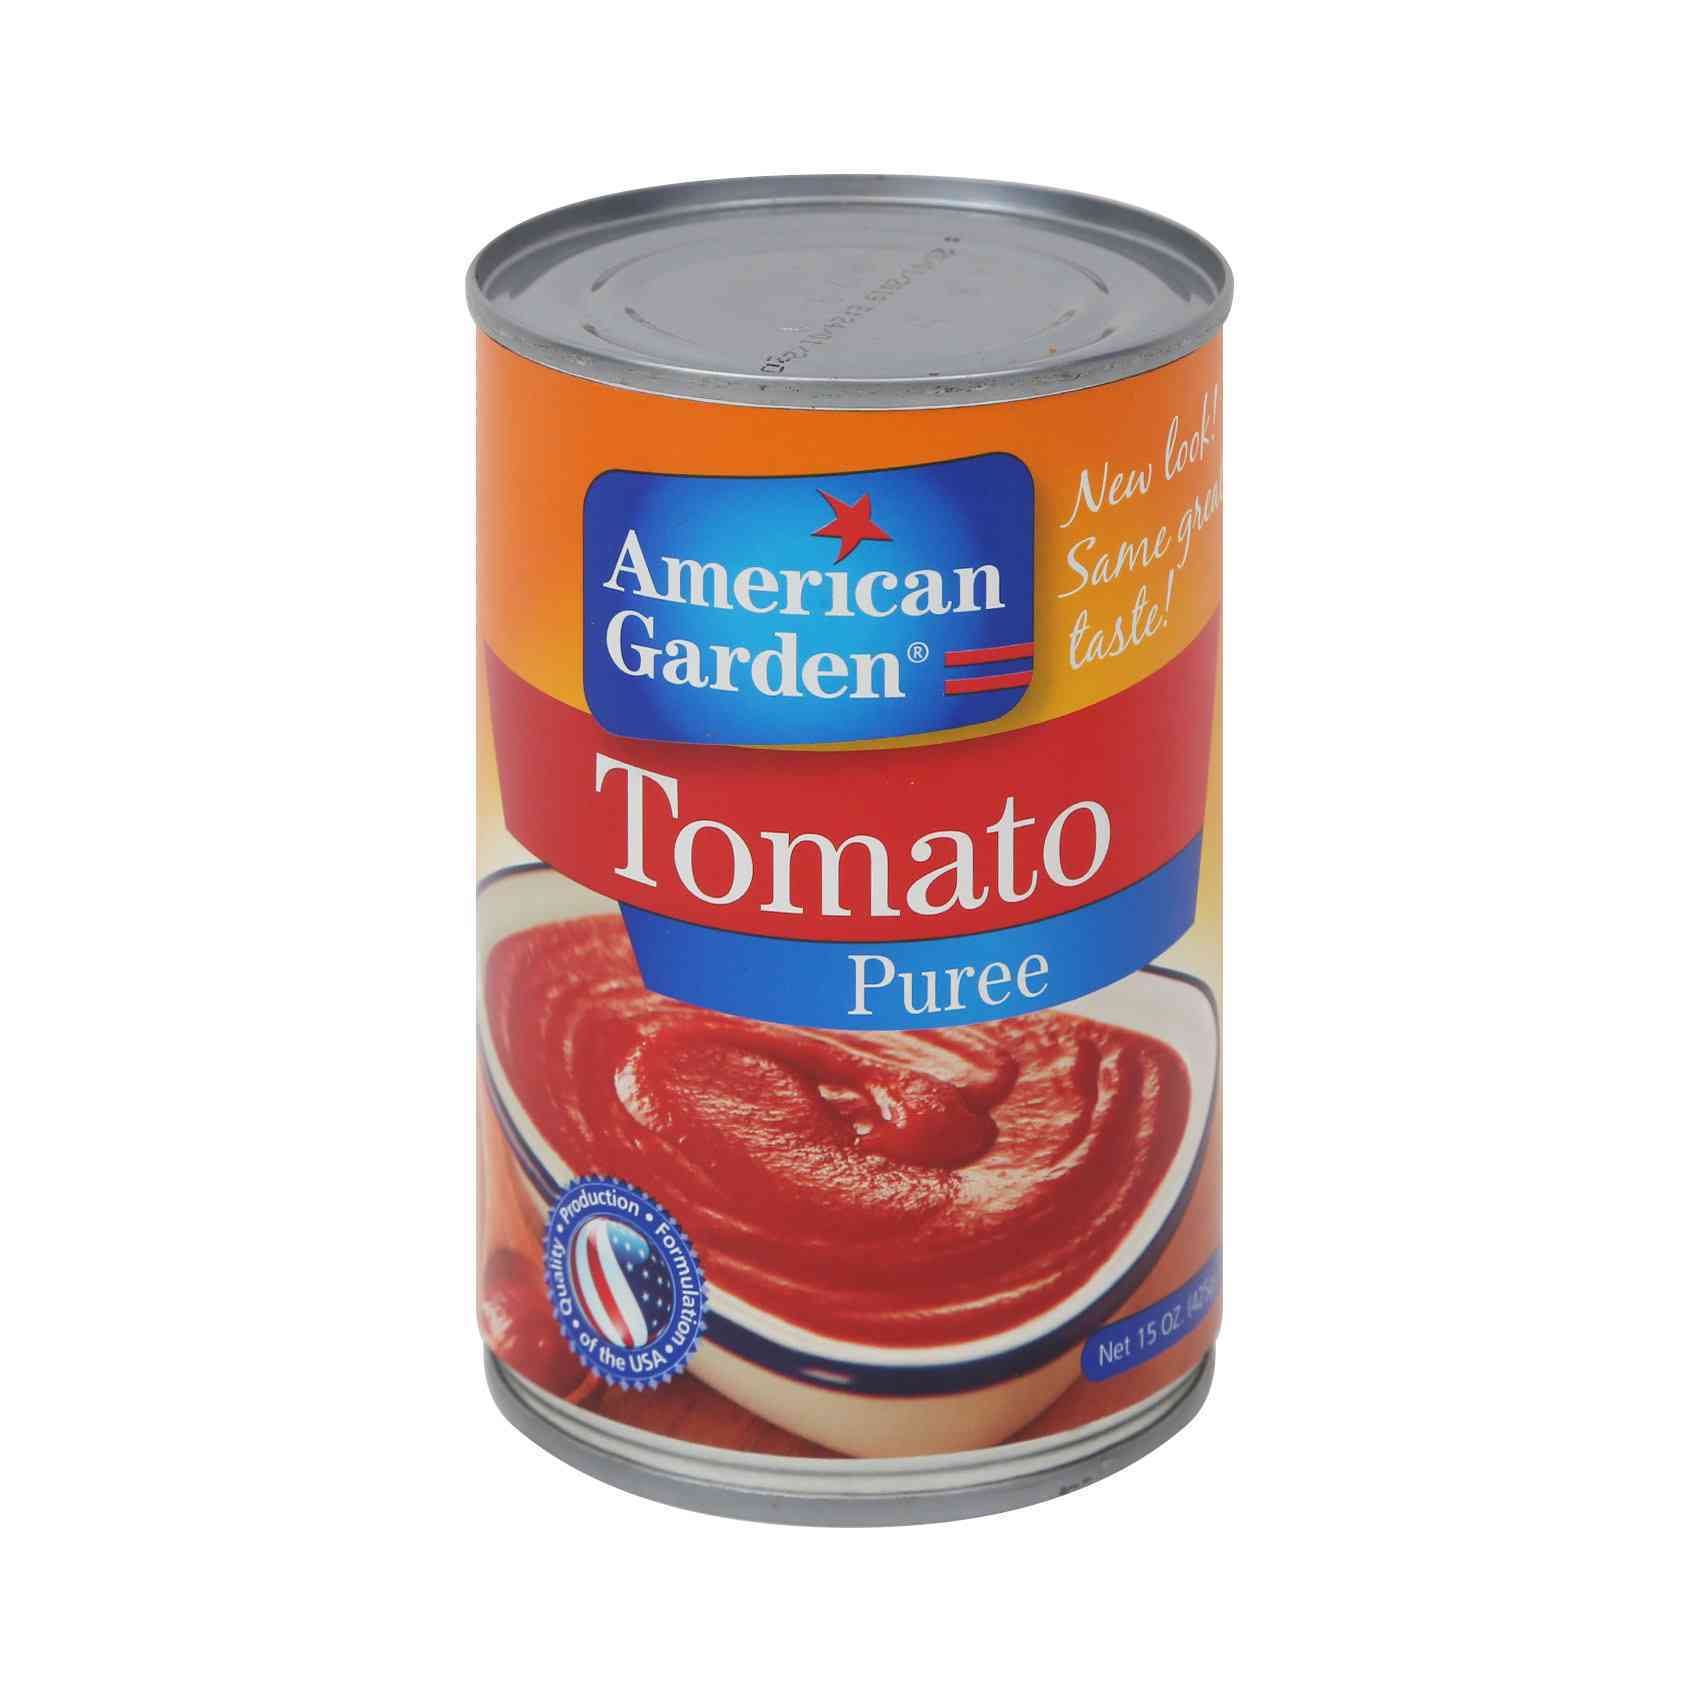 Puree tomato